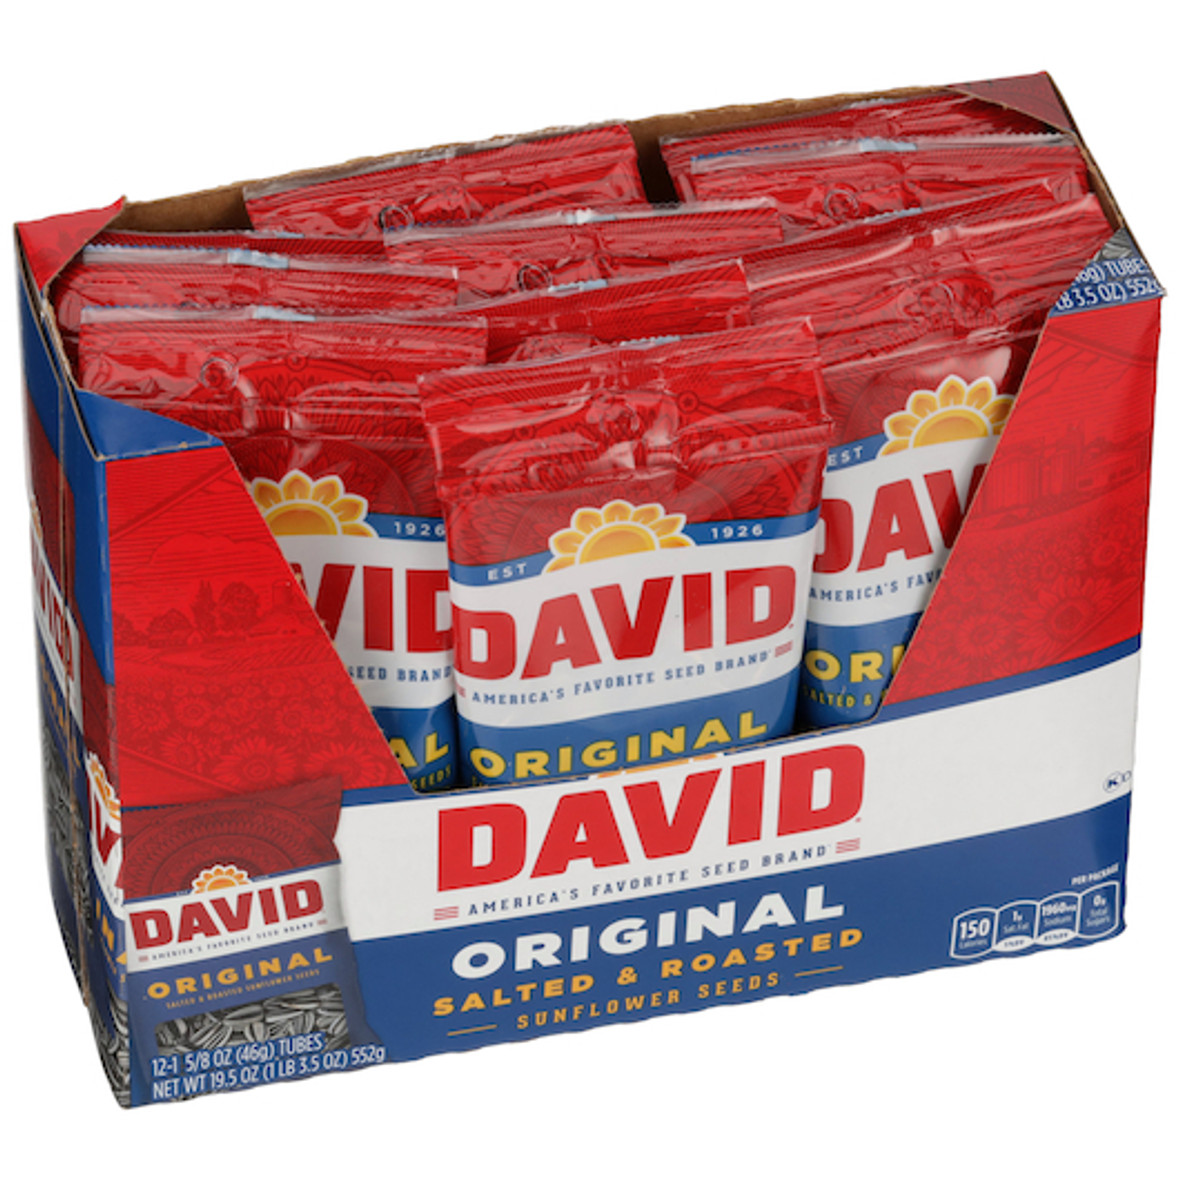 David Original Unpriced Tubes, 1.63 Ounces, 12 Per Box, 12 Per Case